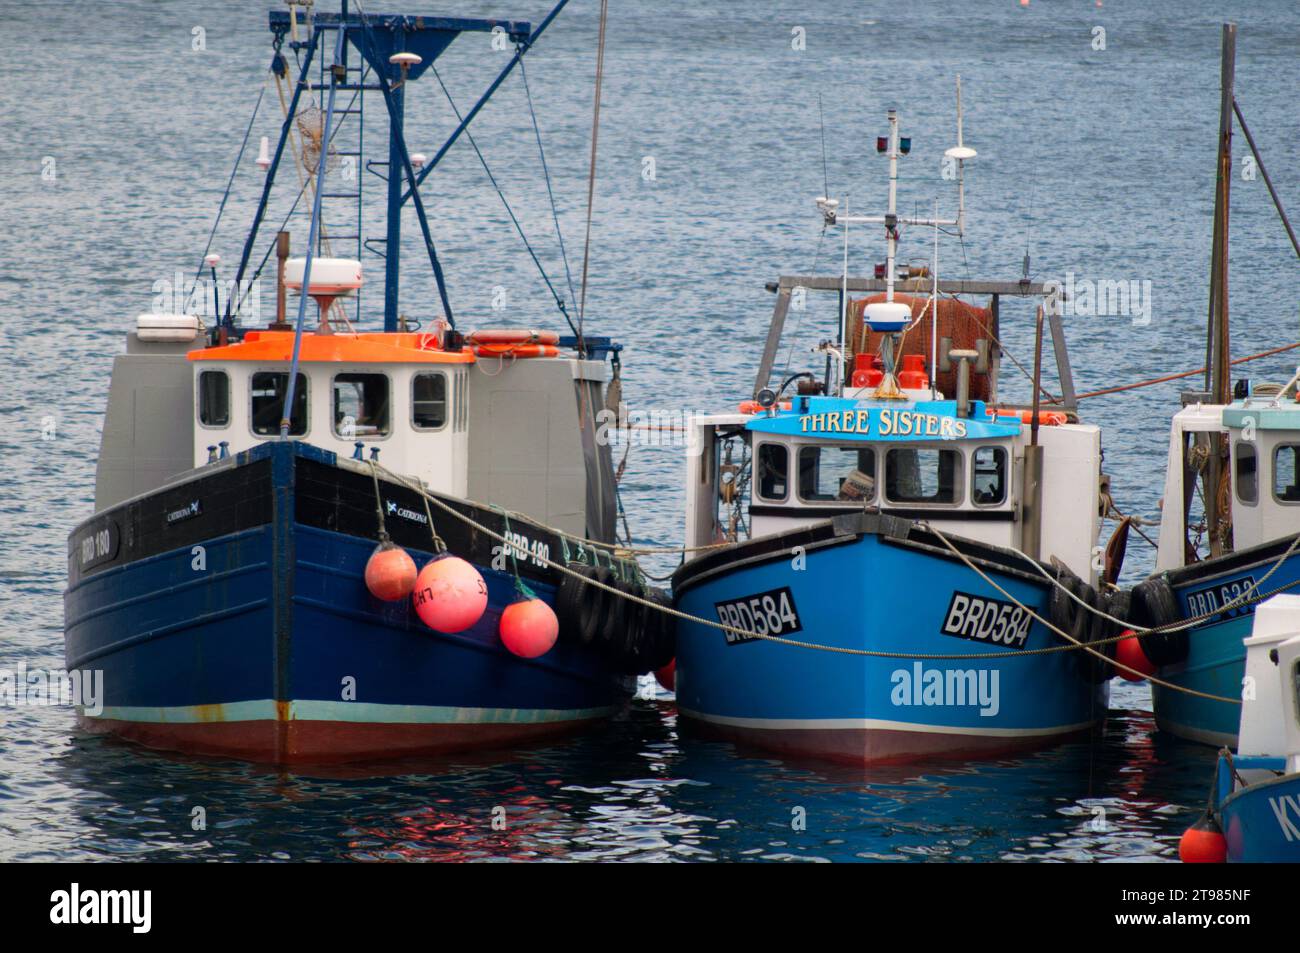 Fishing boats in a Scottish harbor. Barcos pesqueros en un puerto escoces Stock Photo